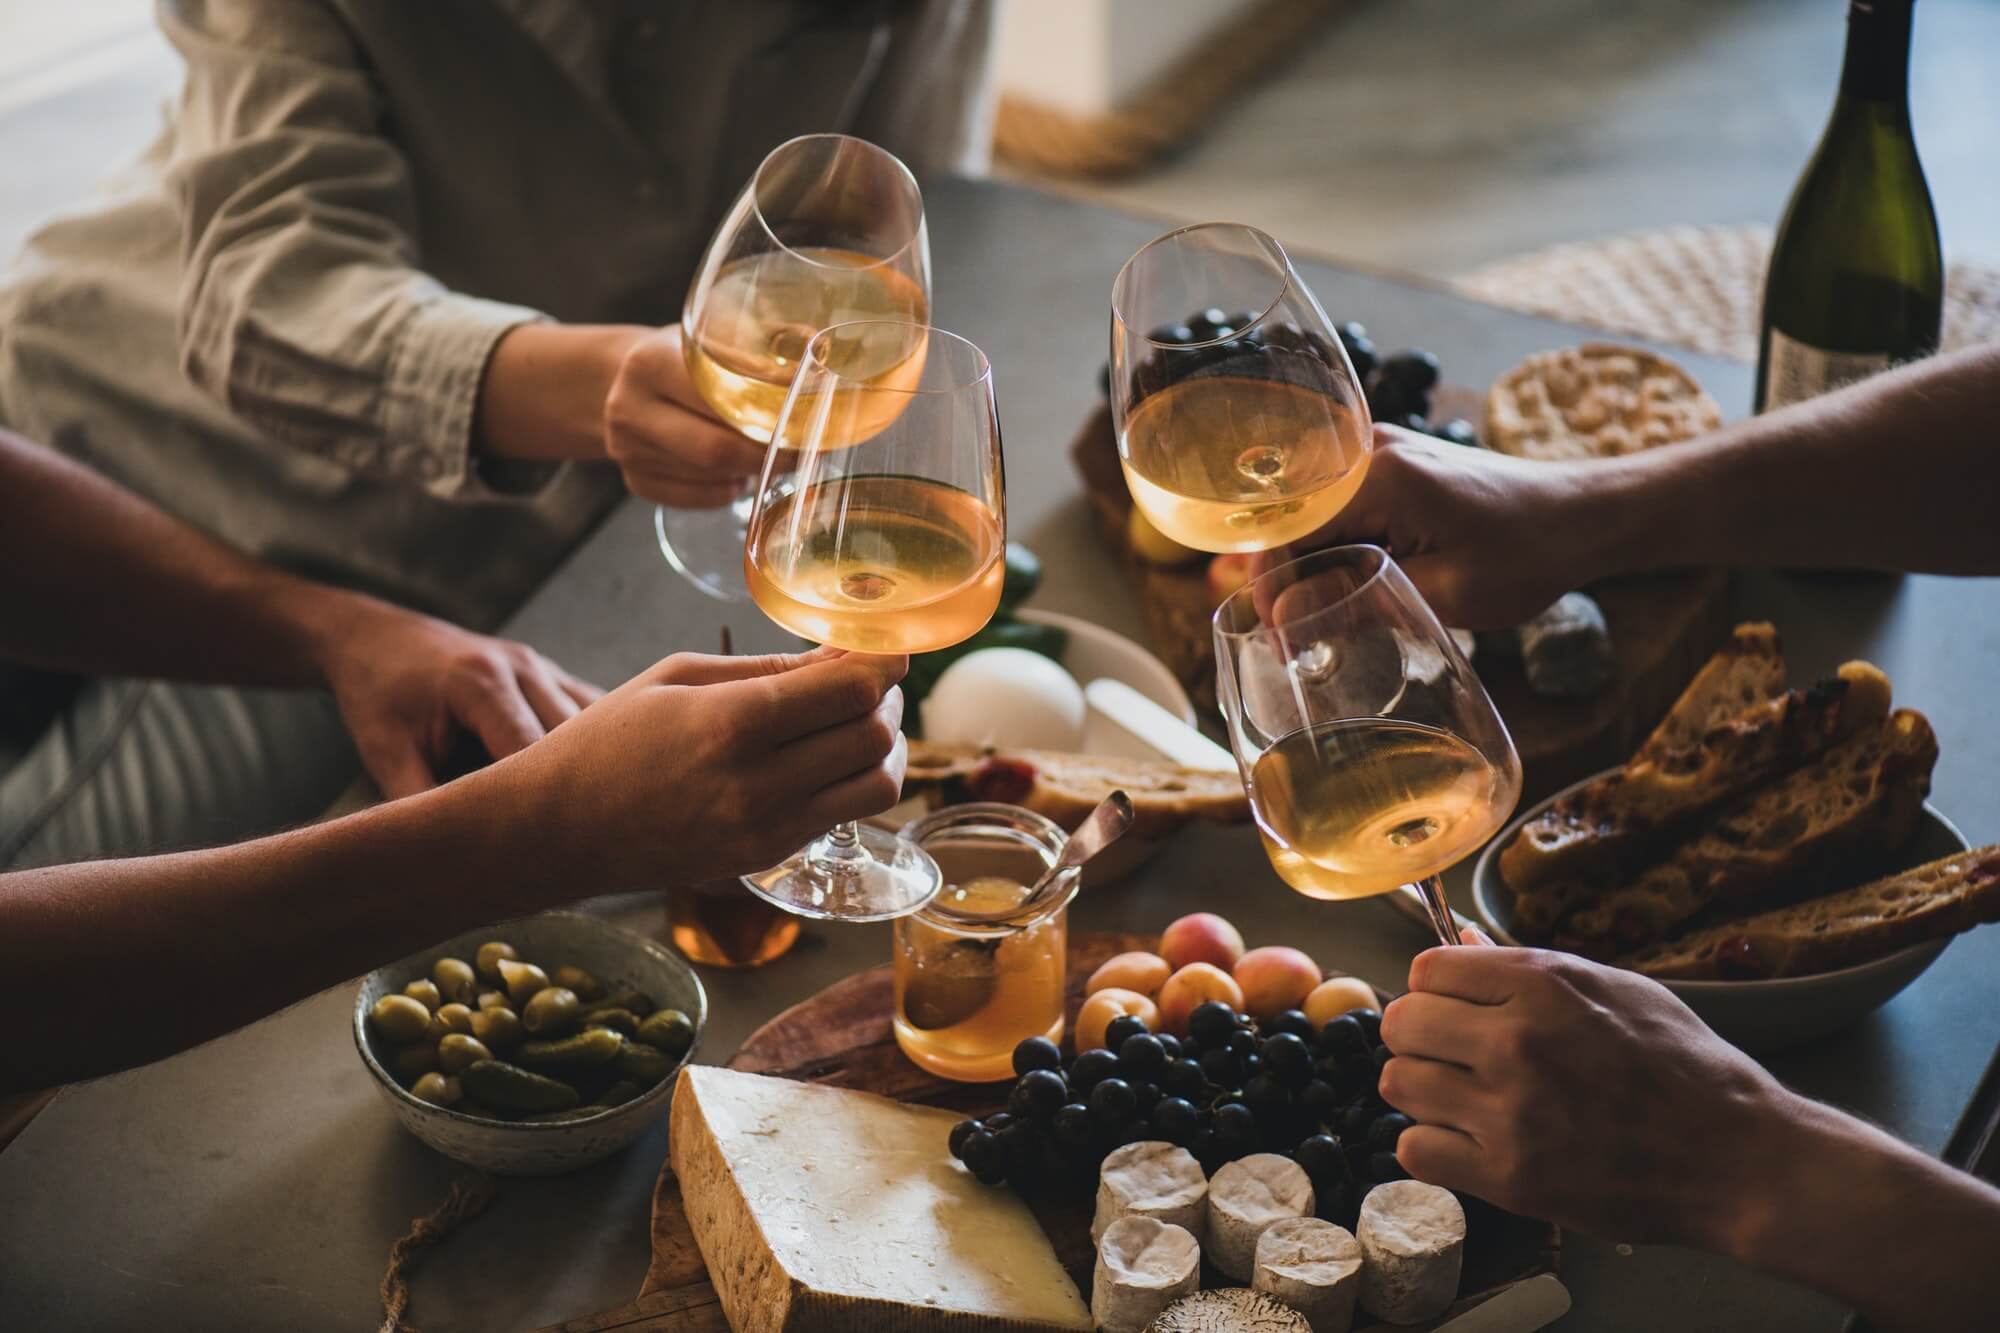 friends-having-wine-tasting-or-celebrating-event-with-wine.jpg